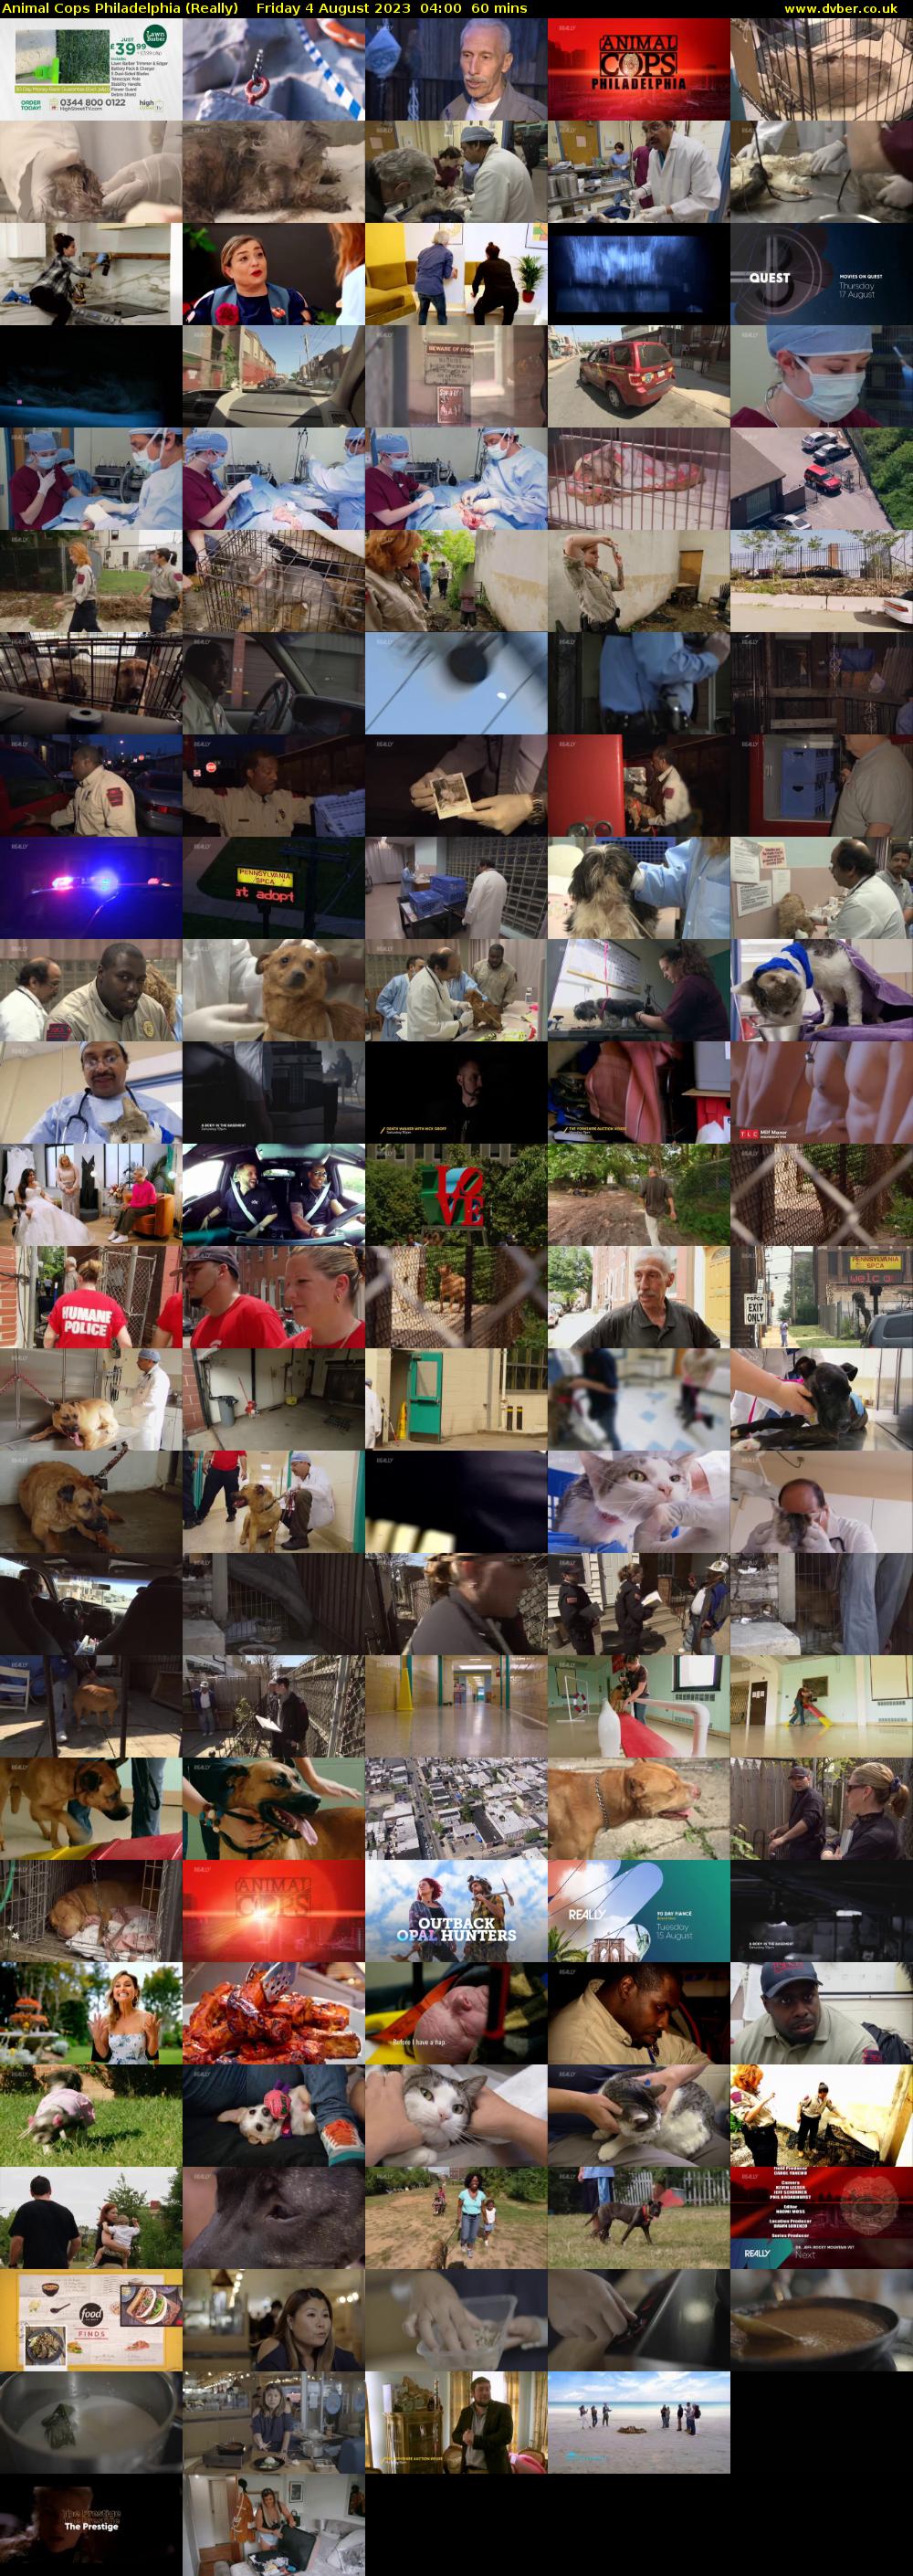 Animal Cops Philadelphia (Really) Friday 4 August 2023 04:00 - 05:00